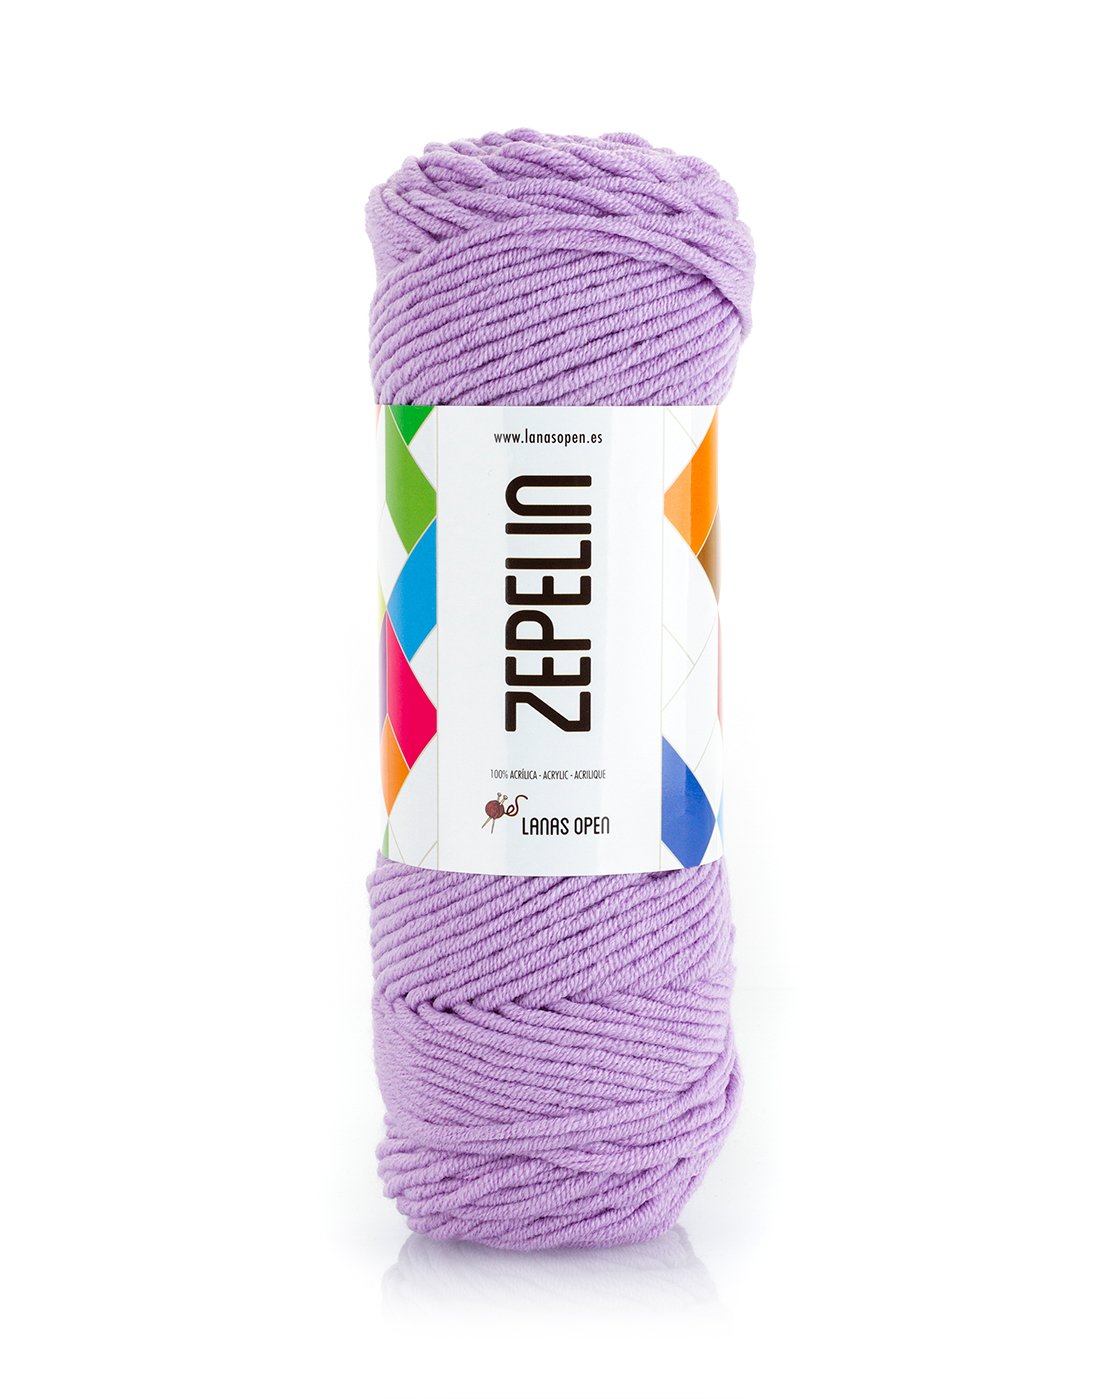 Ovillo de lana modelo zepelin